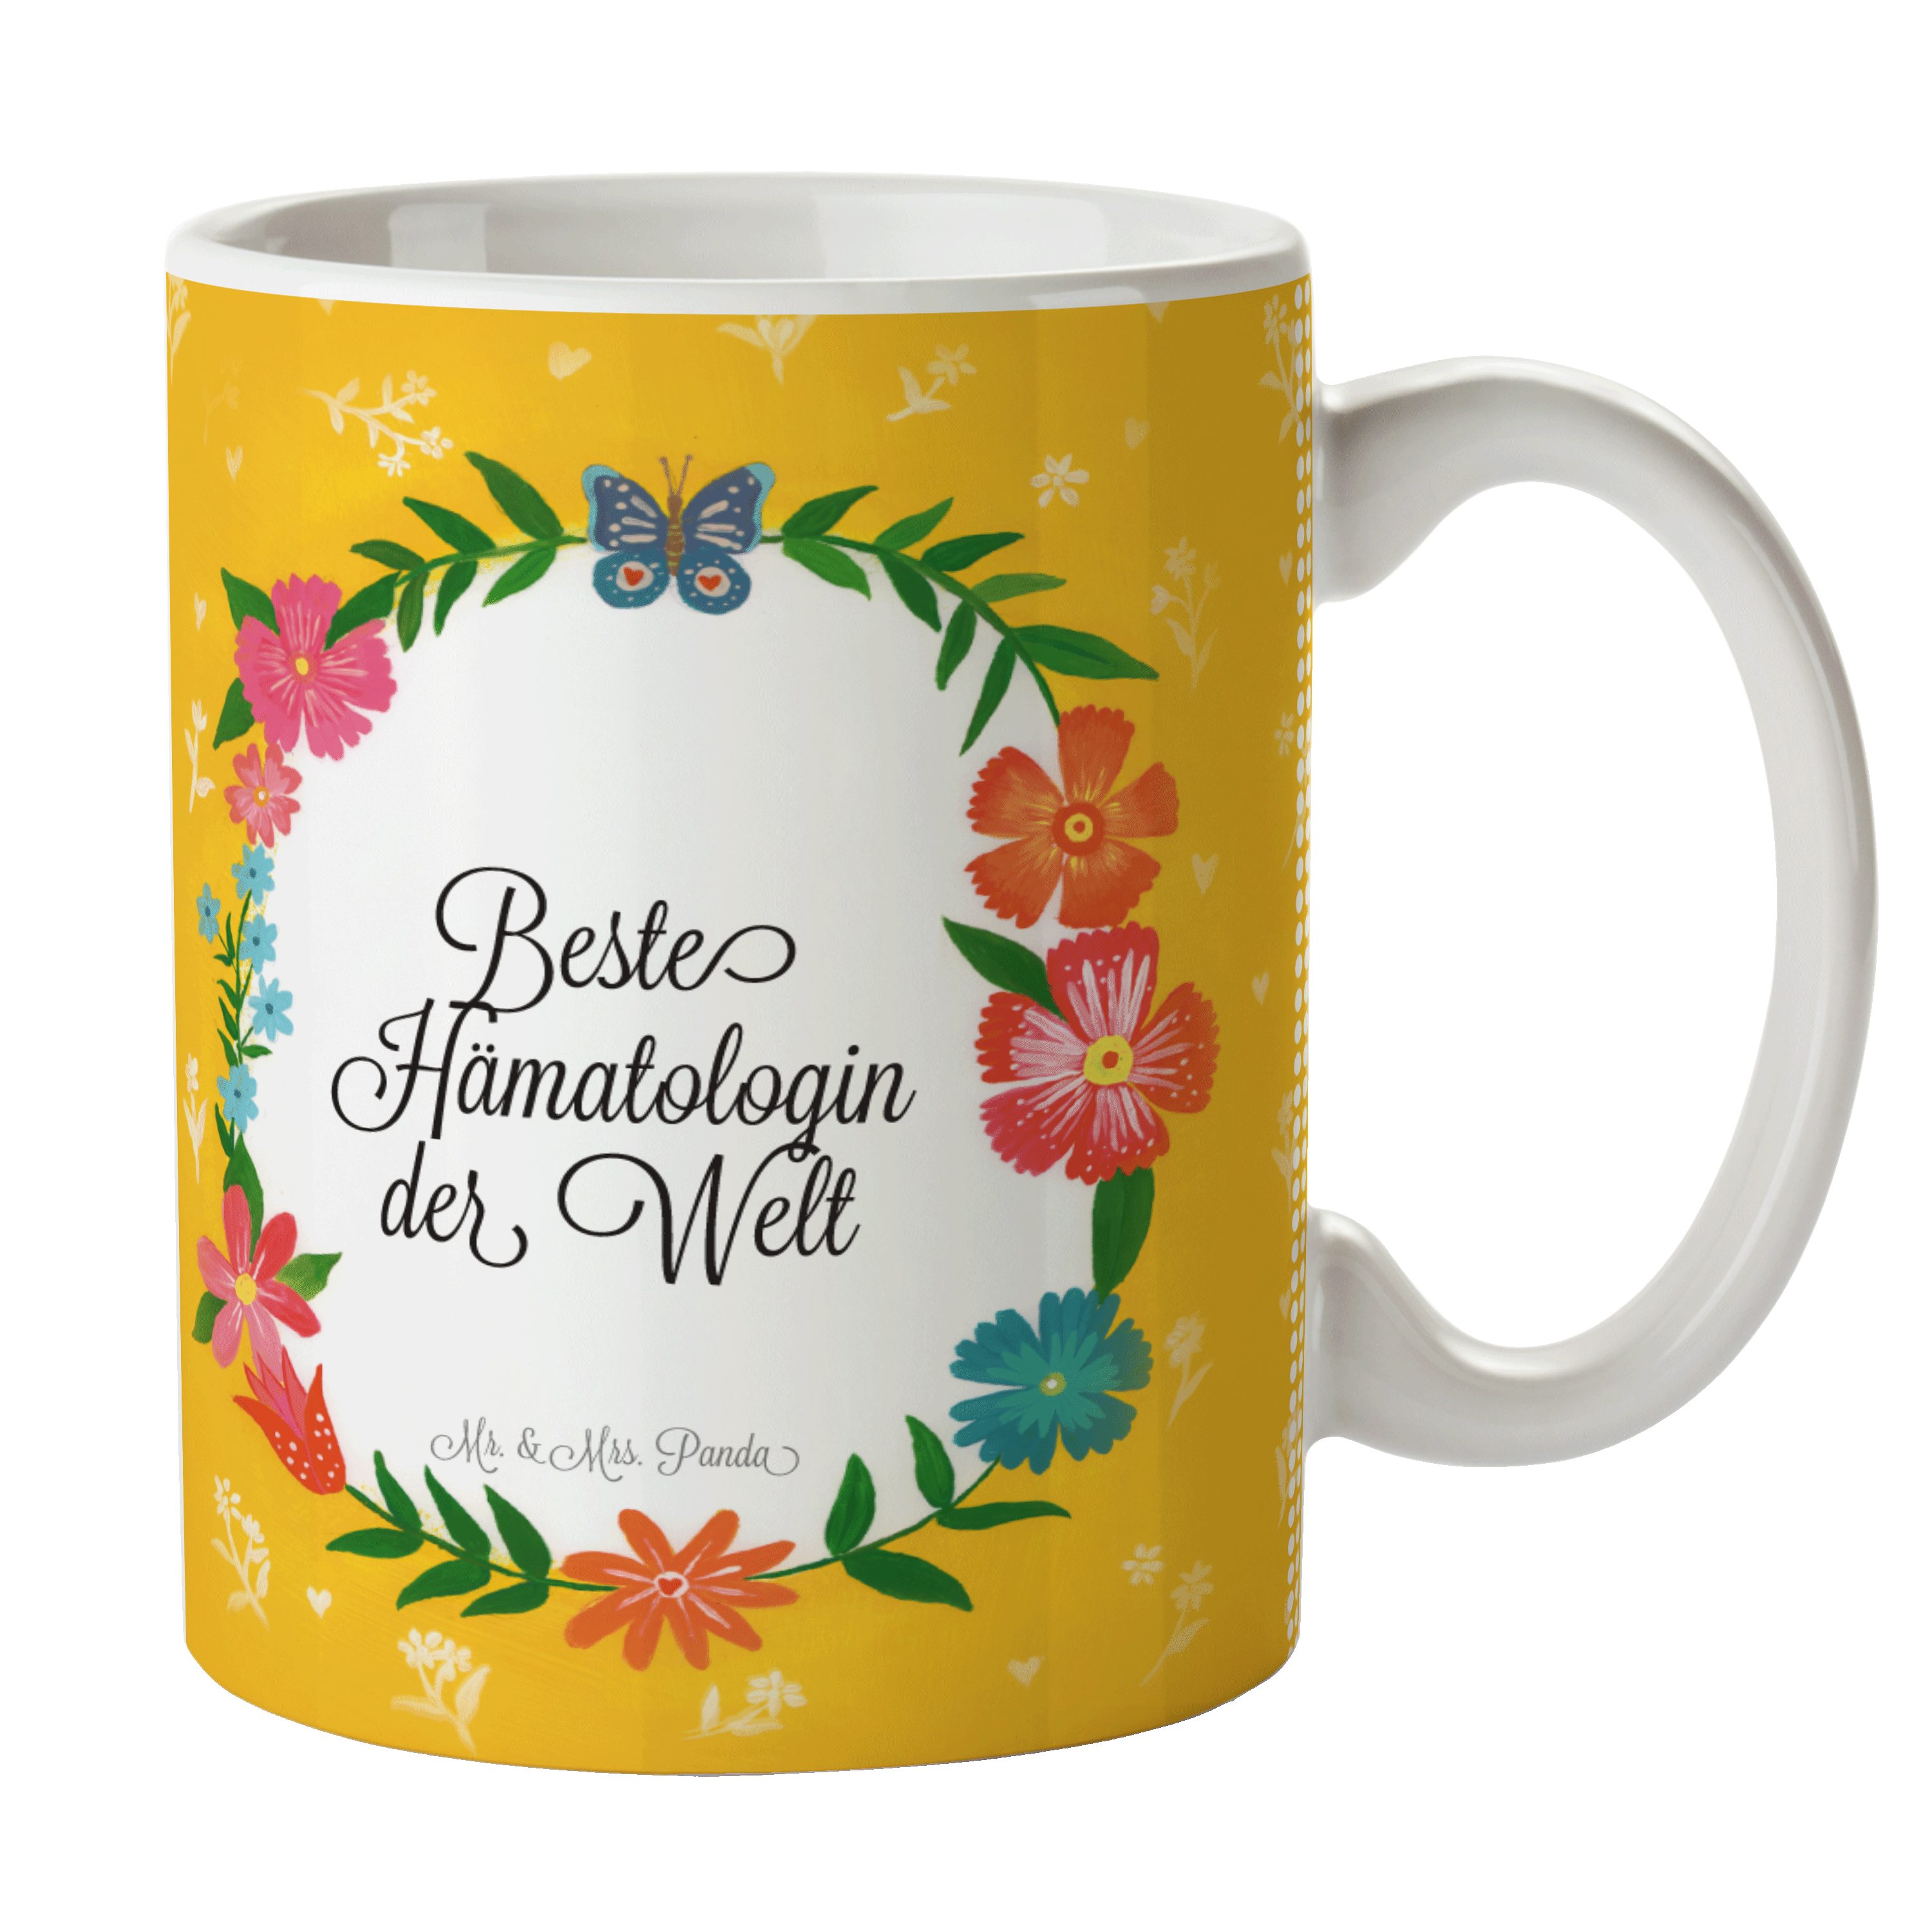 Mr. & Mrs. Becher, Keramik Tasse Geschenk, Kaffeetasse, Hämatologin Tasse Sprüche, - Panda Bachelor